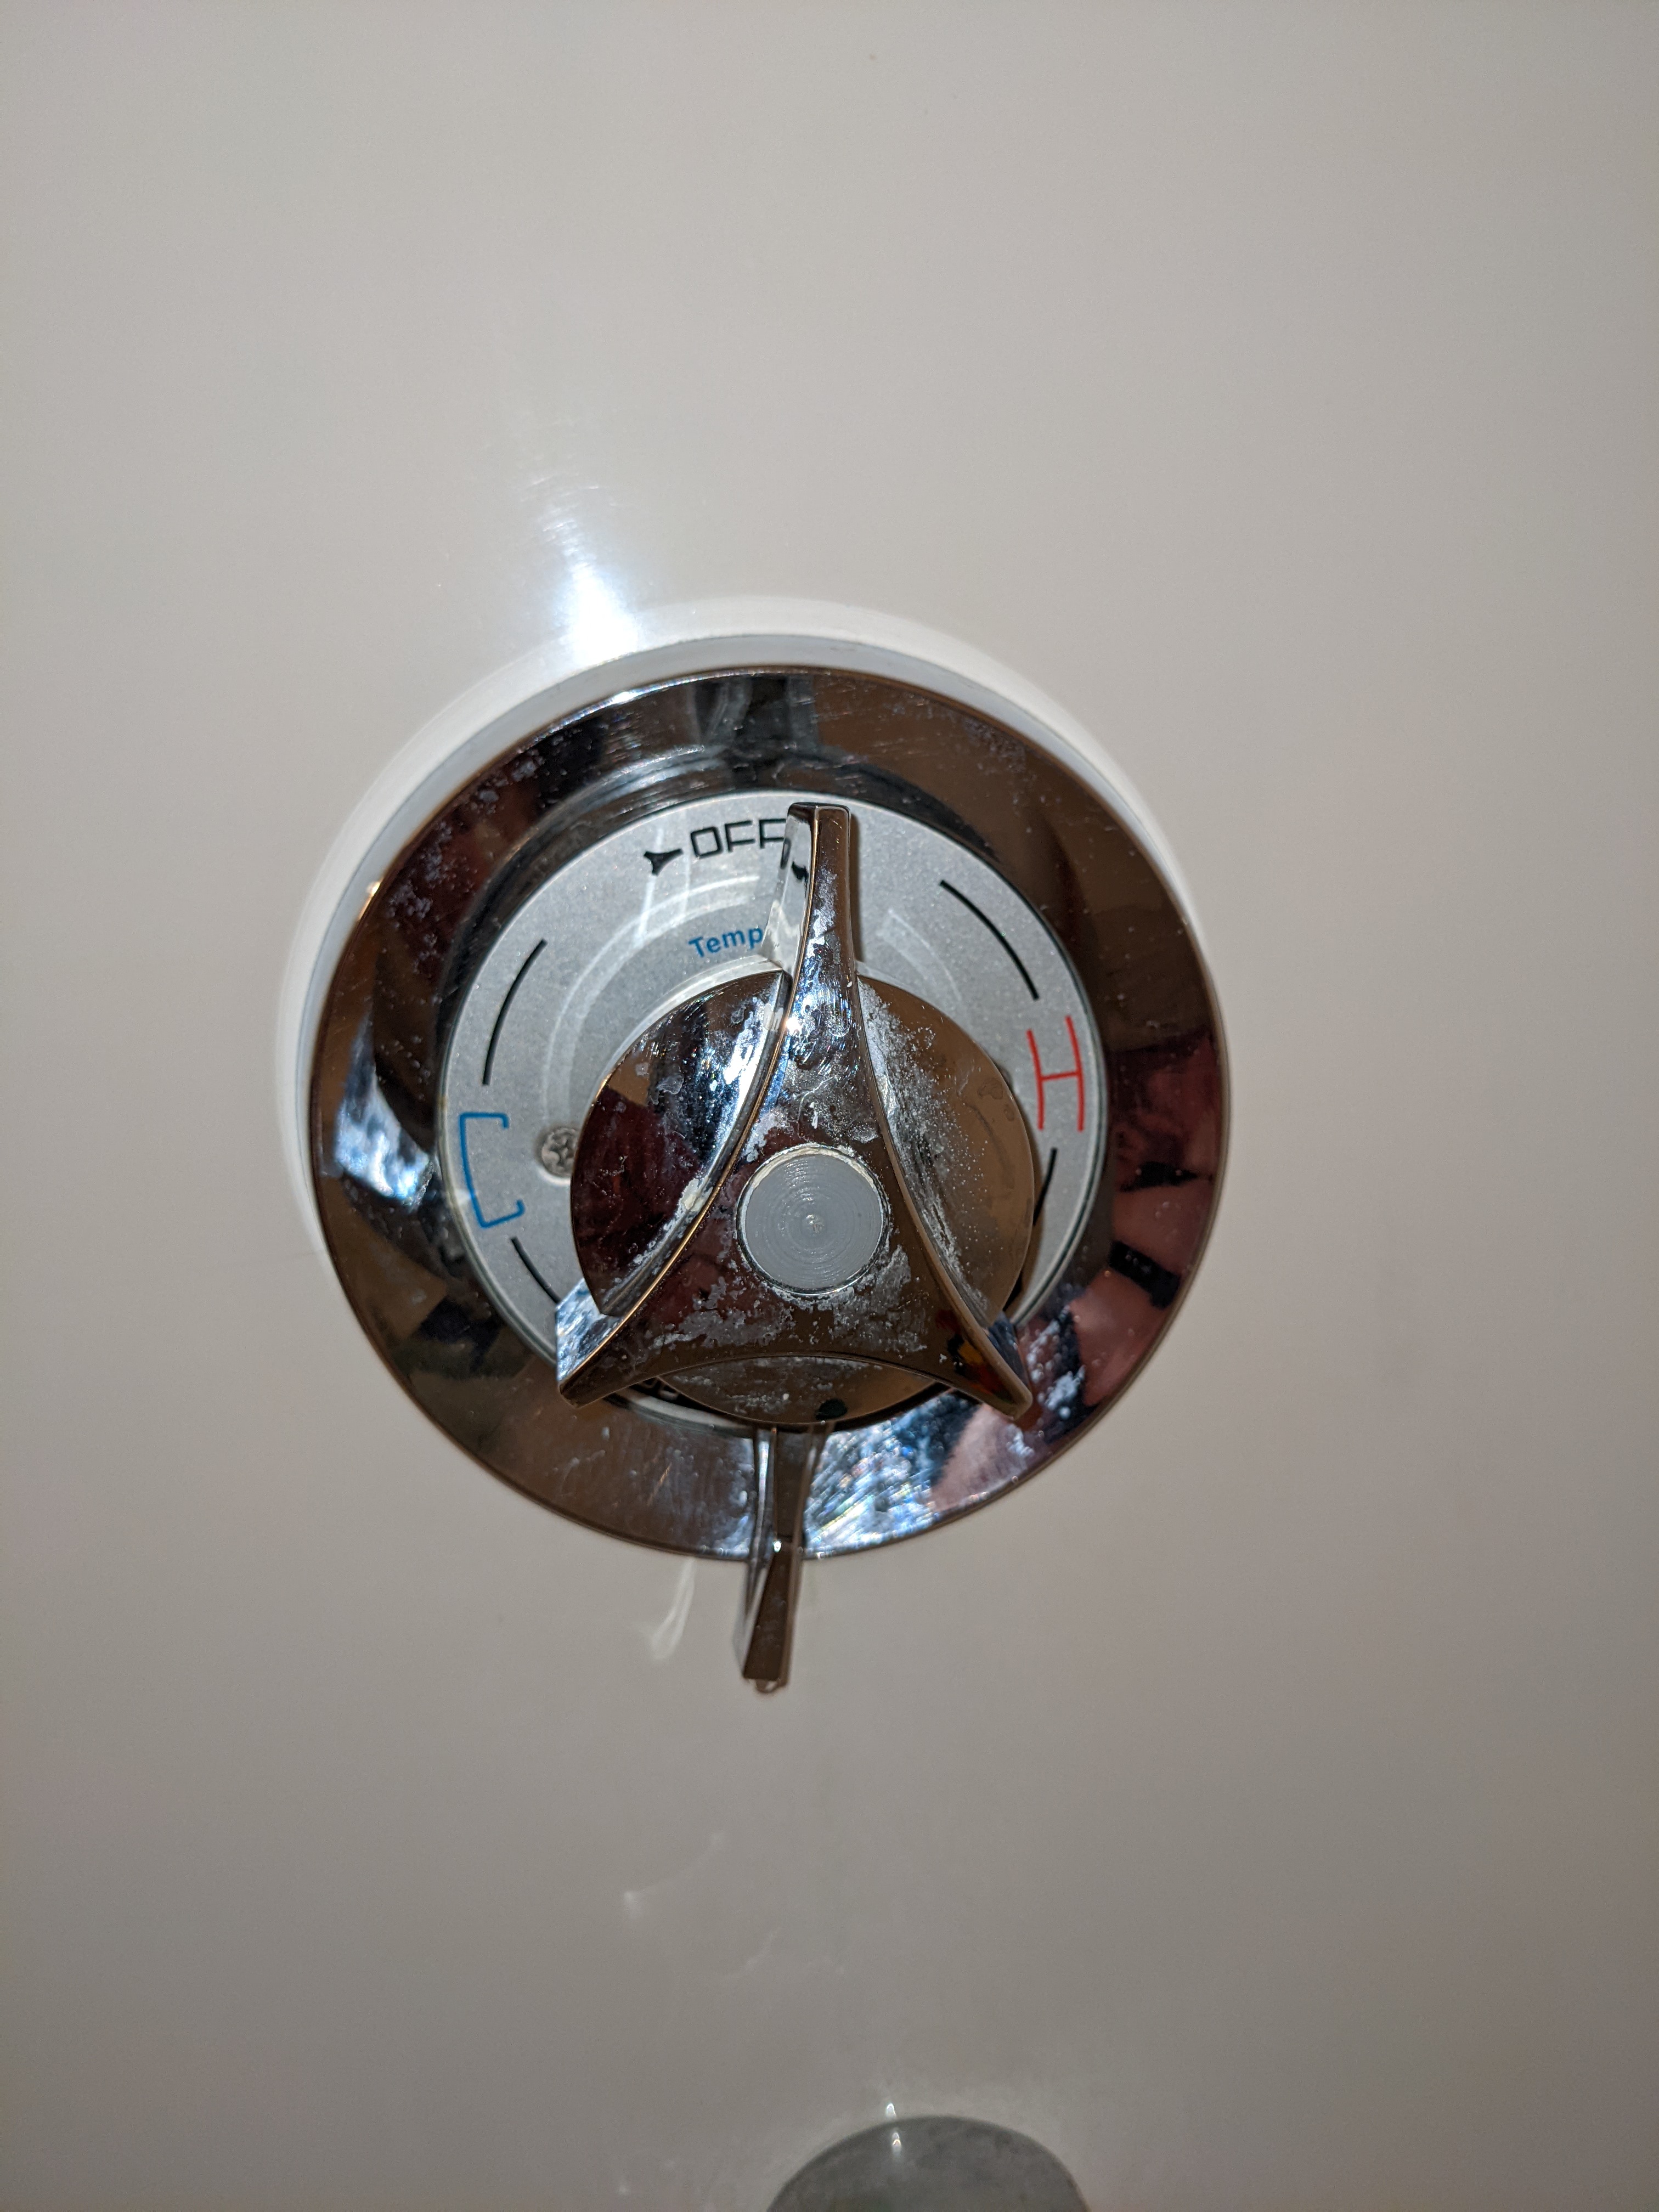 Cap for Temptrol shower/bath flow/temperature control